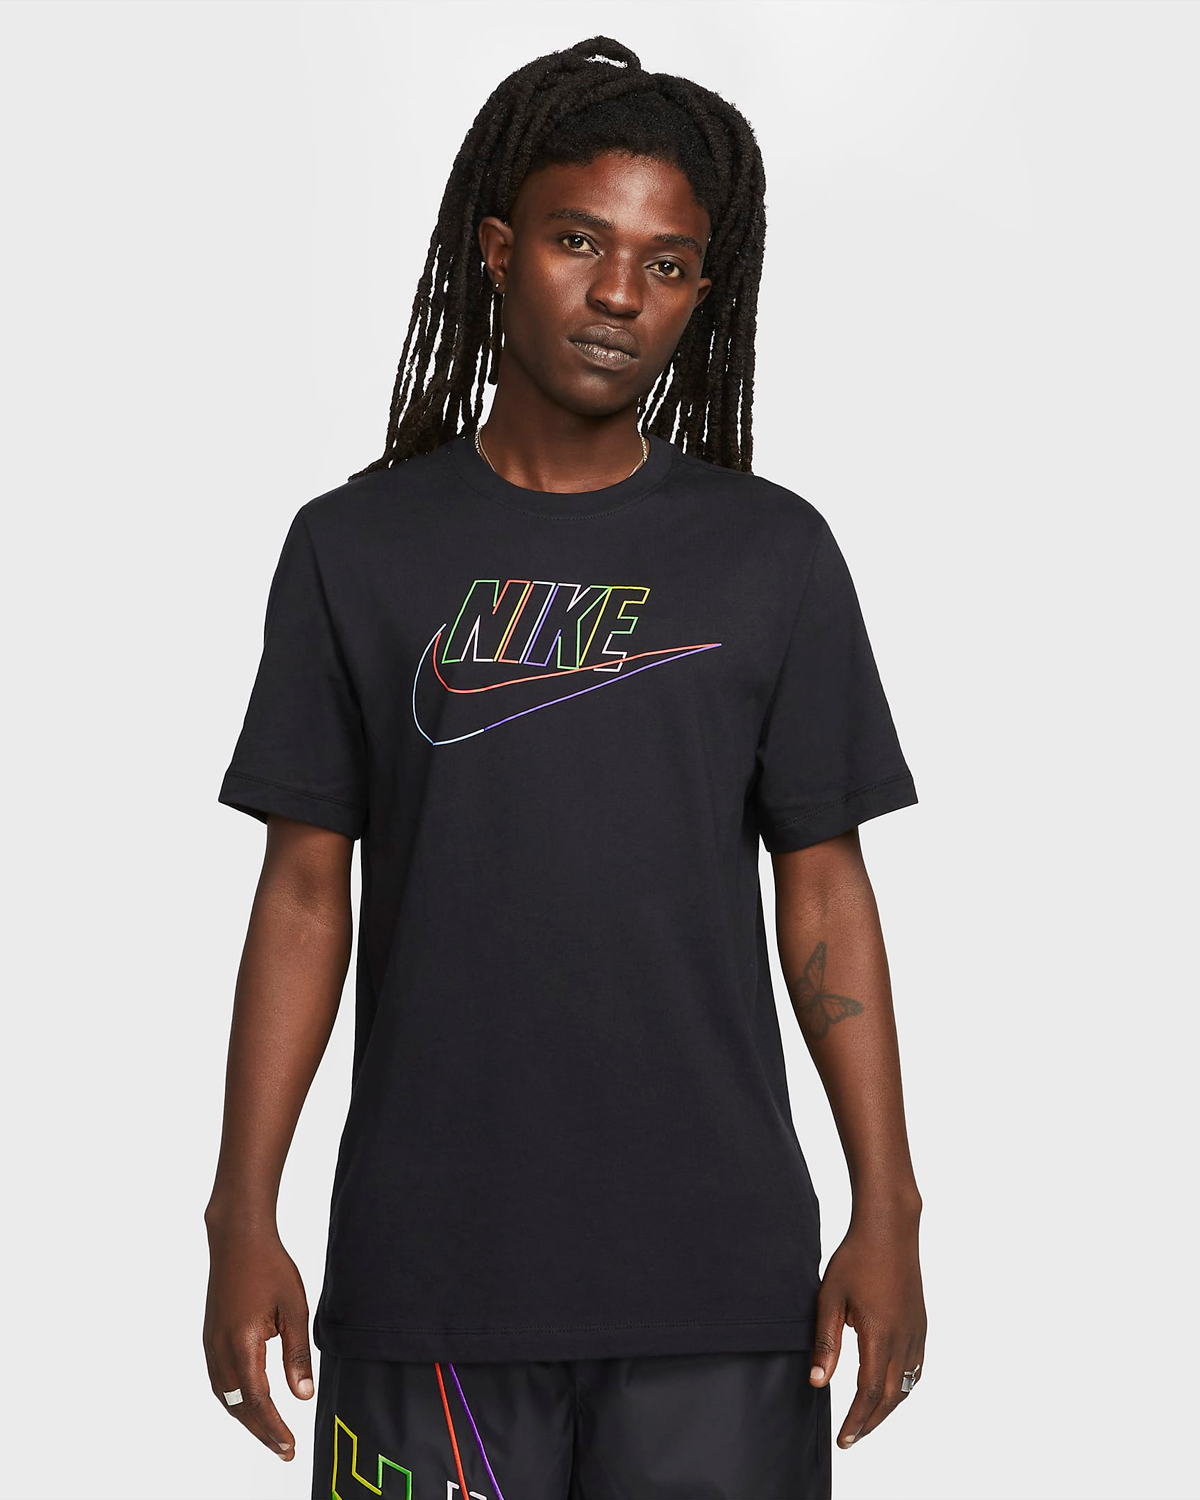 Nike-Sportswear-T-Shirt-Black-Multi-Color